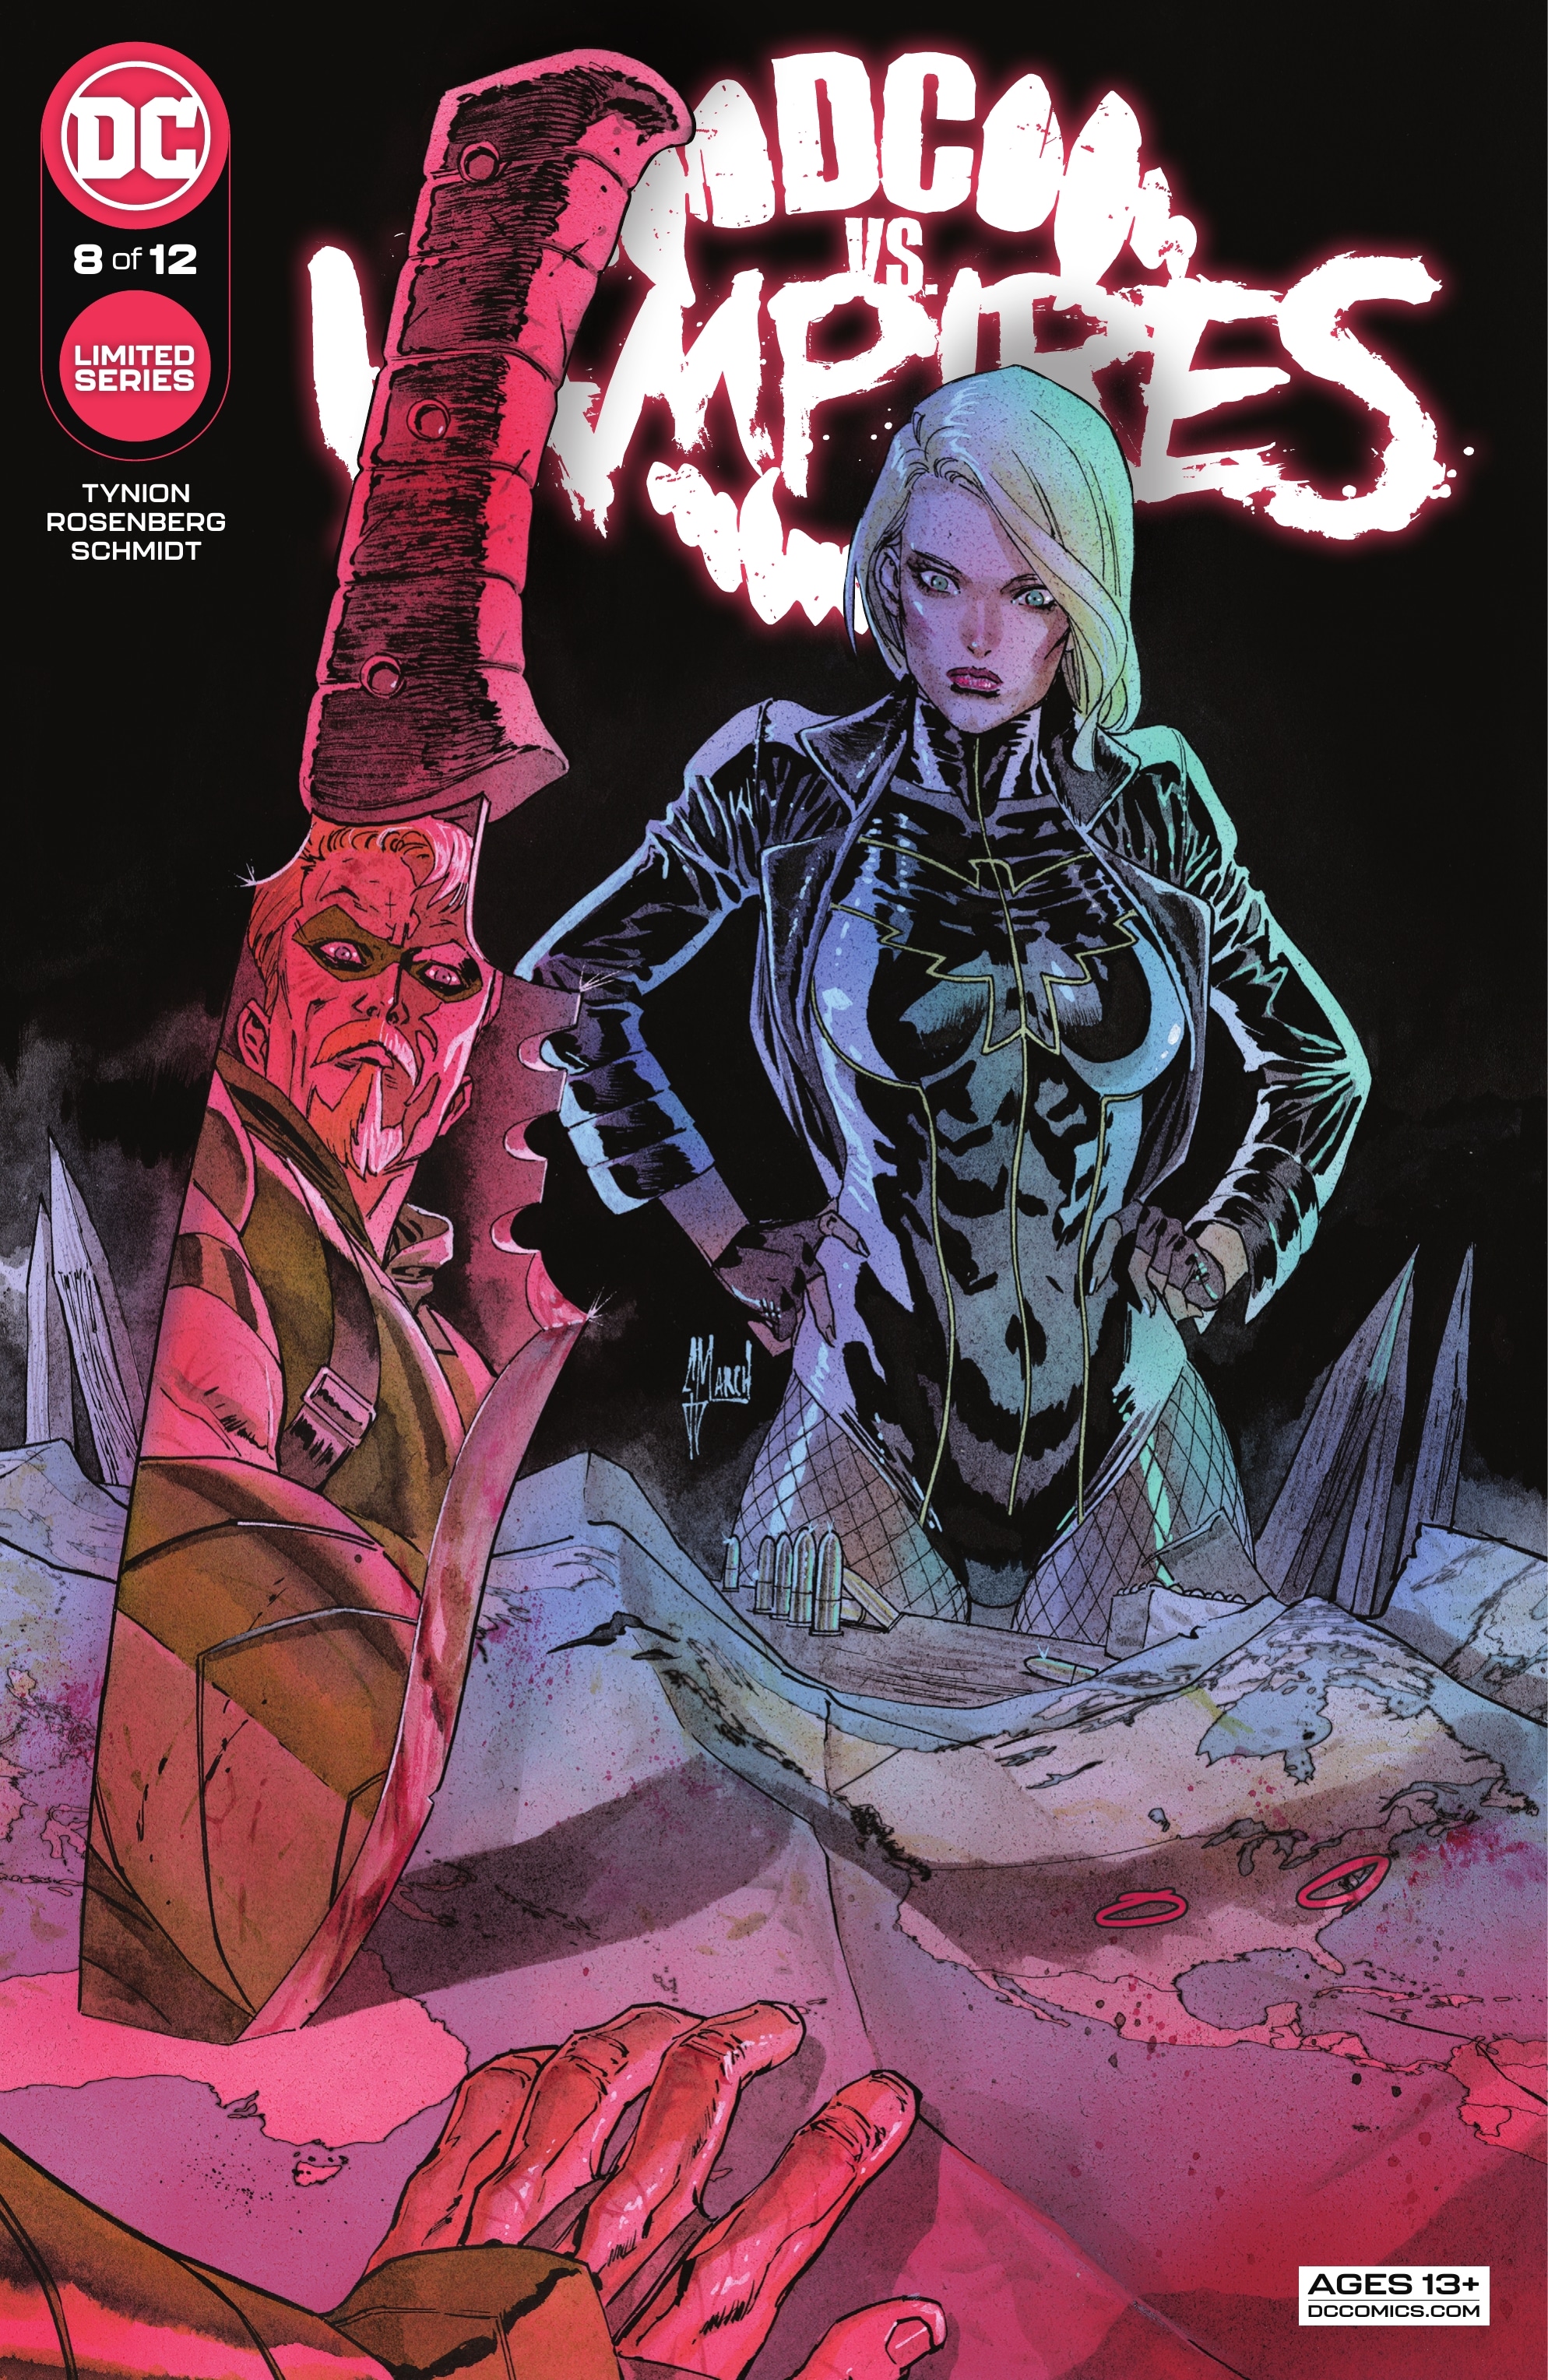 Read online DC vs. Vampires comic -  Issue #8 - 1